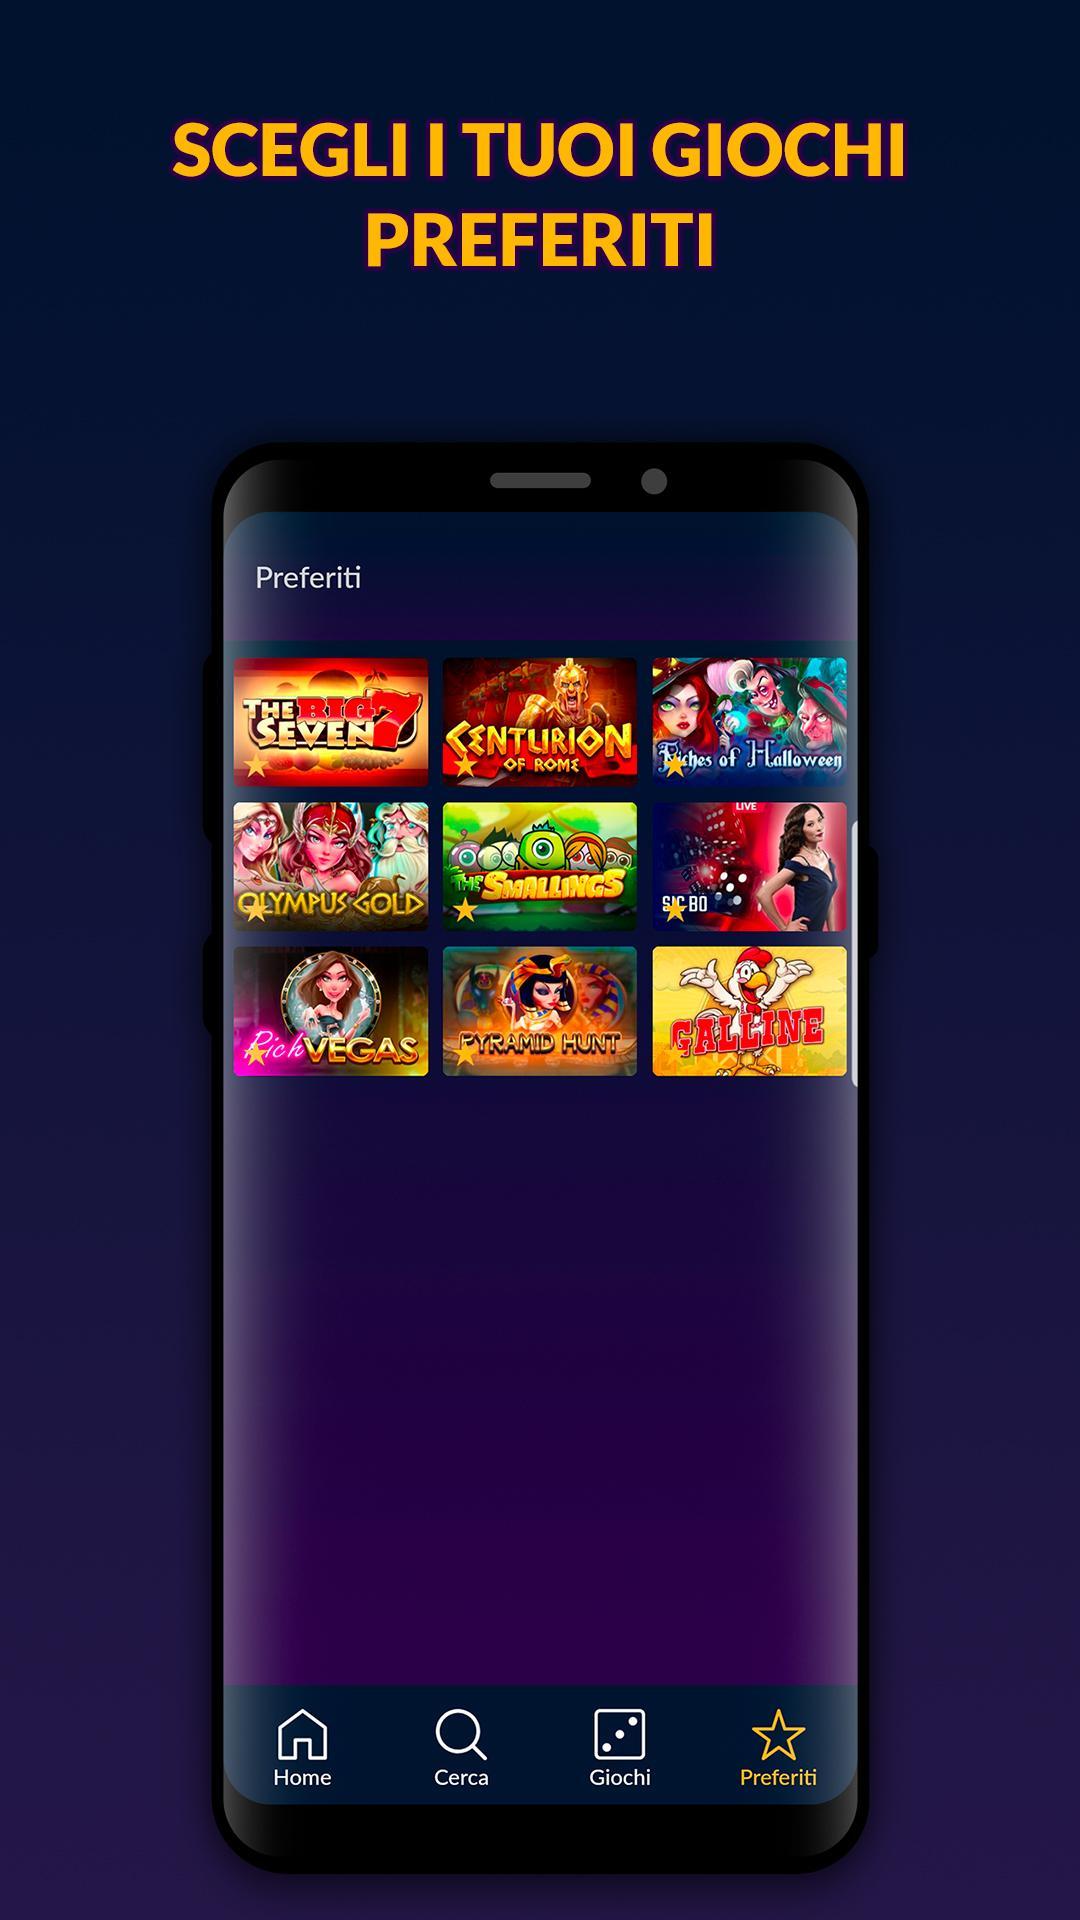 Eurobet Casino App